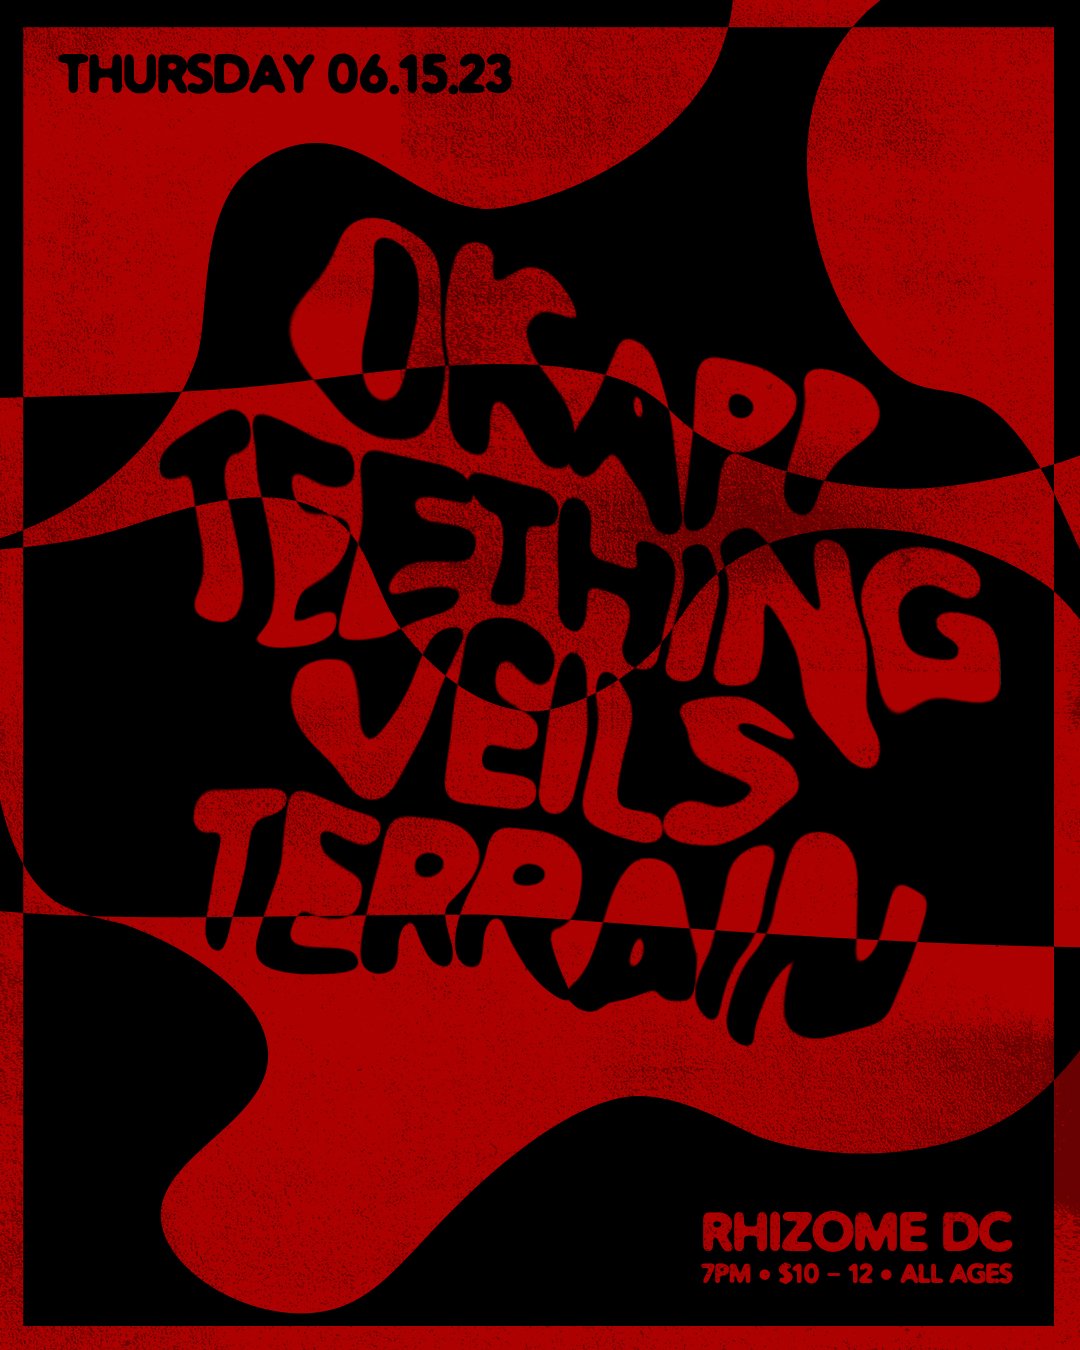 Okapi / Teething Veils / Terrain